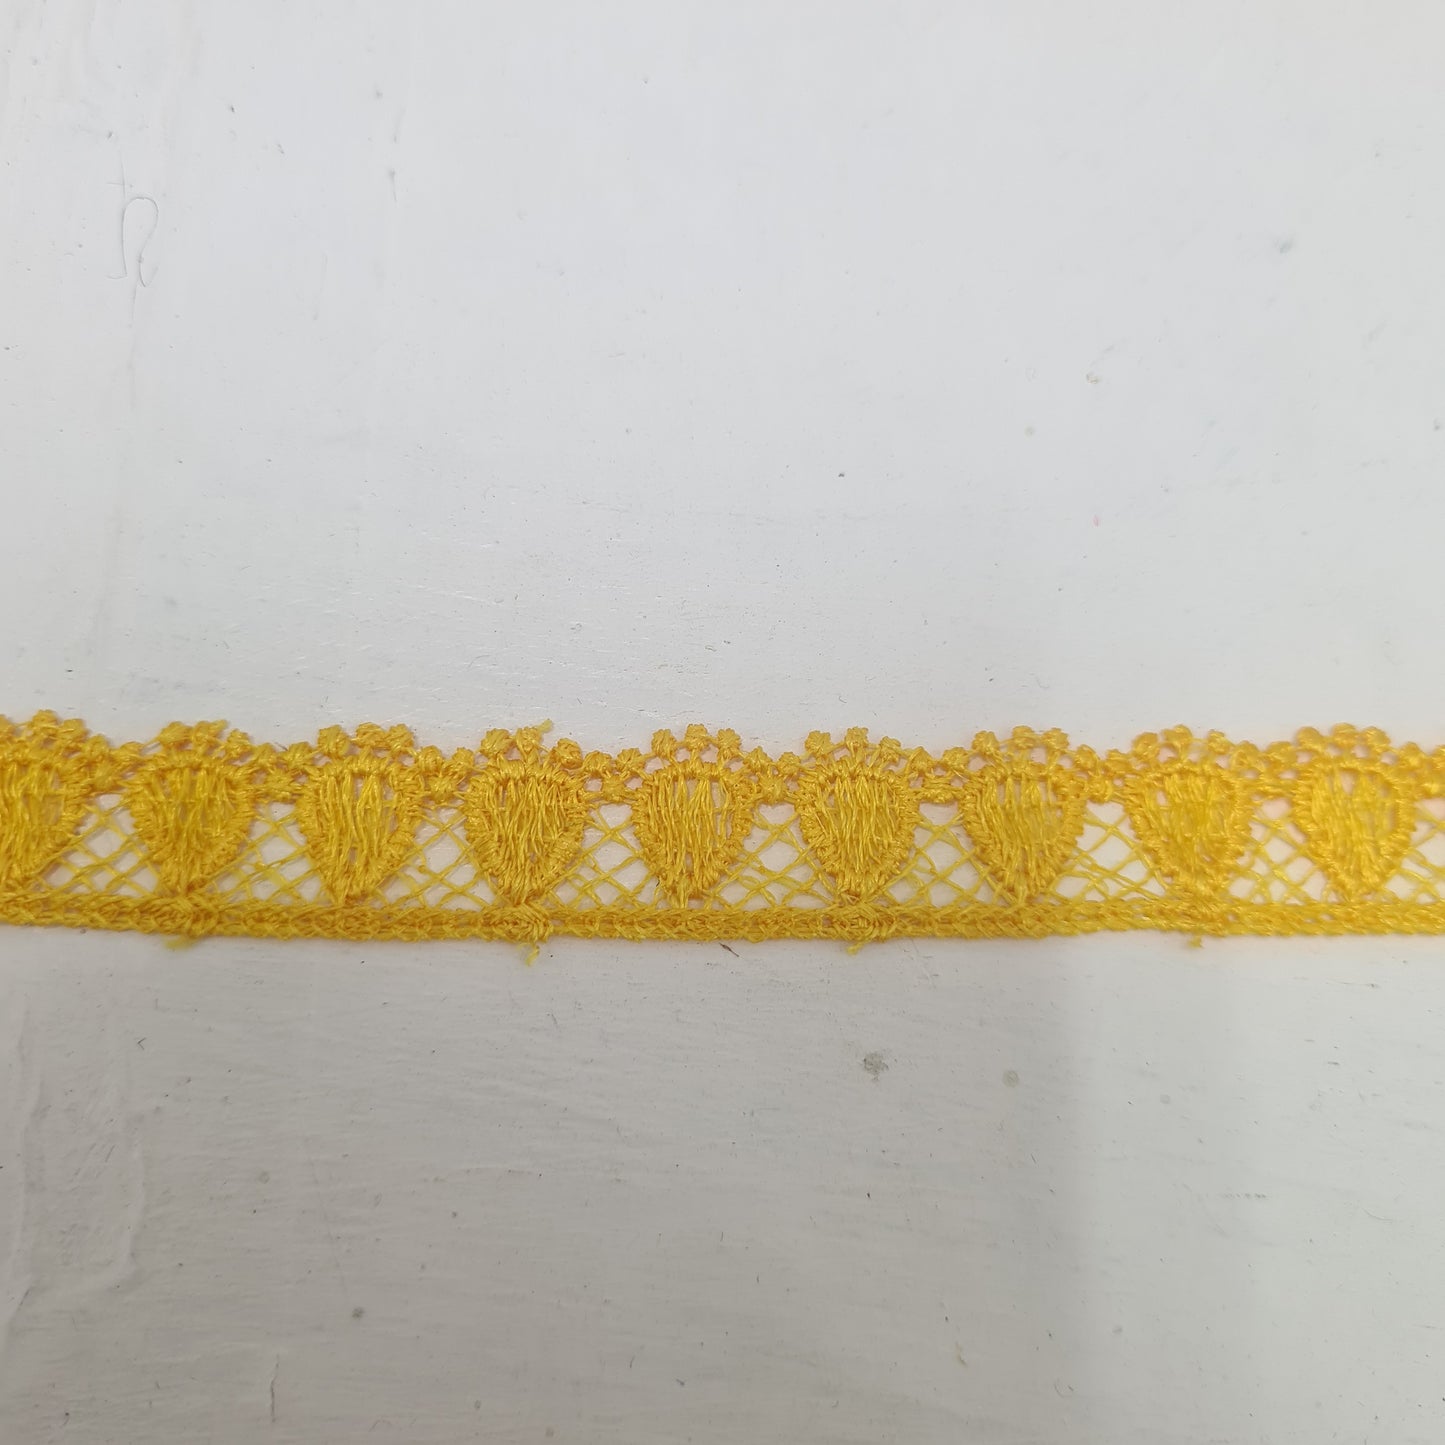 Yellow Lace Trim